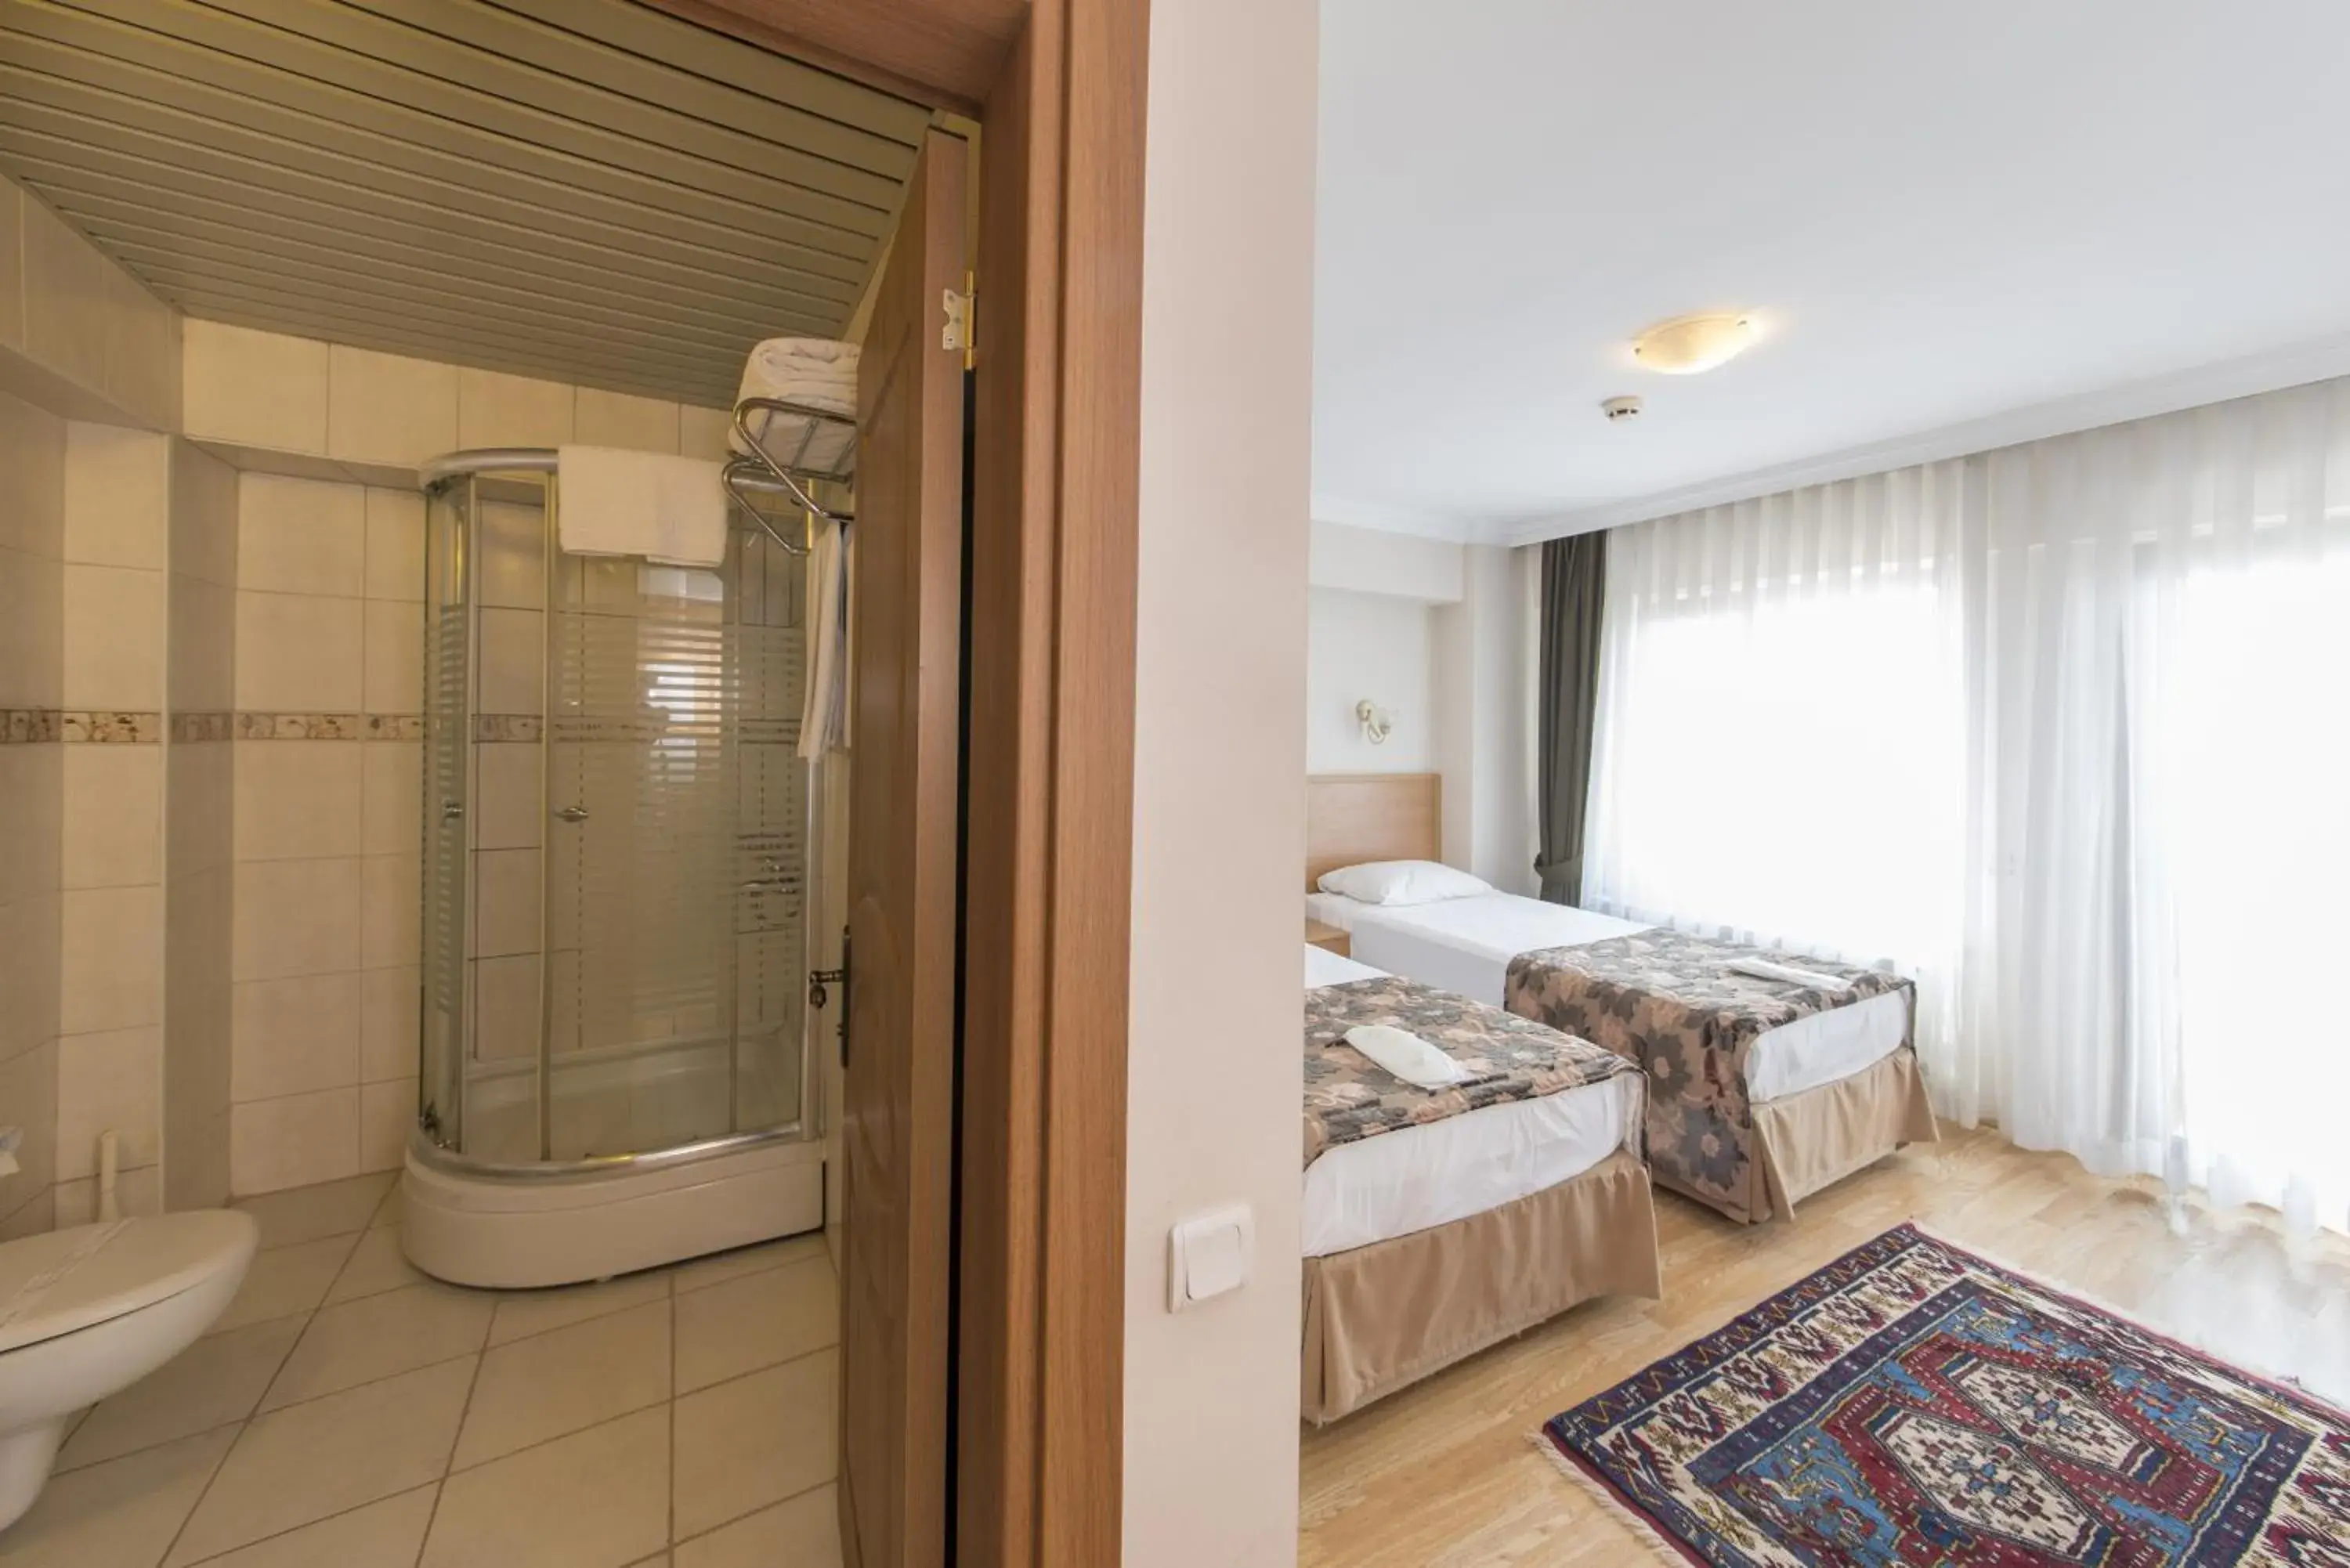 Photo of the whole room, Bathroom in Deniz Houses